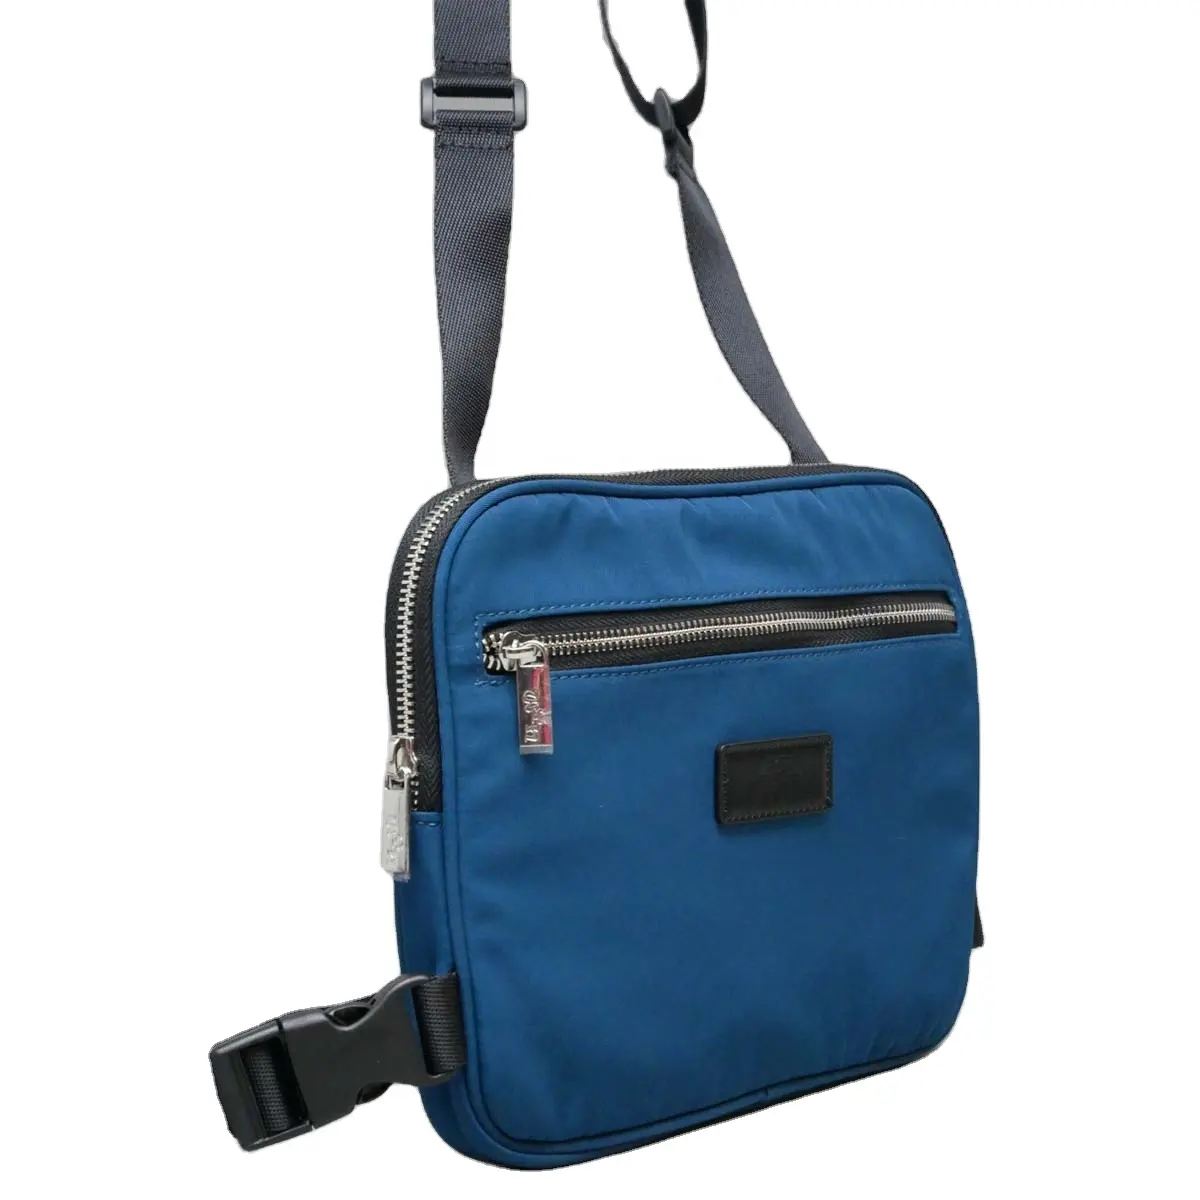 New Arrival Hot Selling lightweight Nylon Belt with slot buckle Plain Navy Blue Small cross bag Fashion women's Messenger Bags